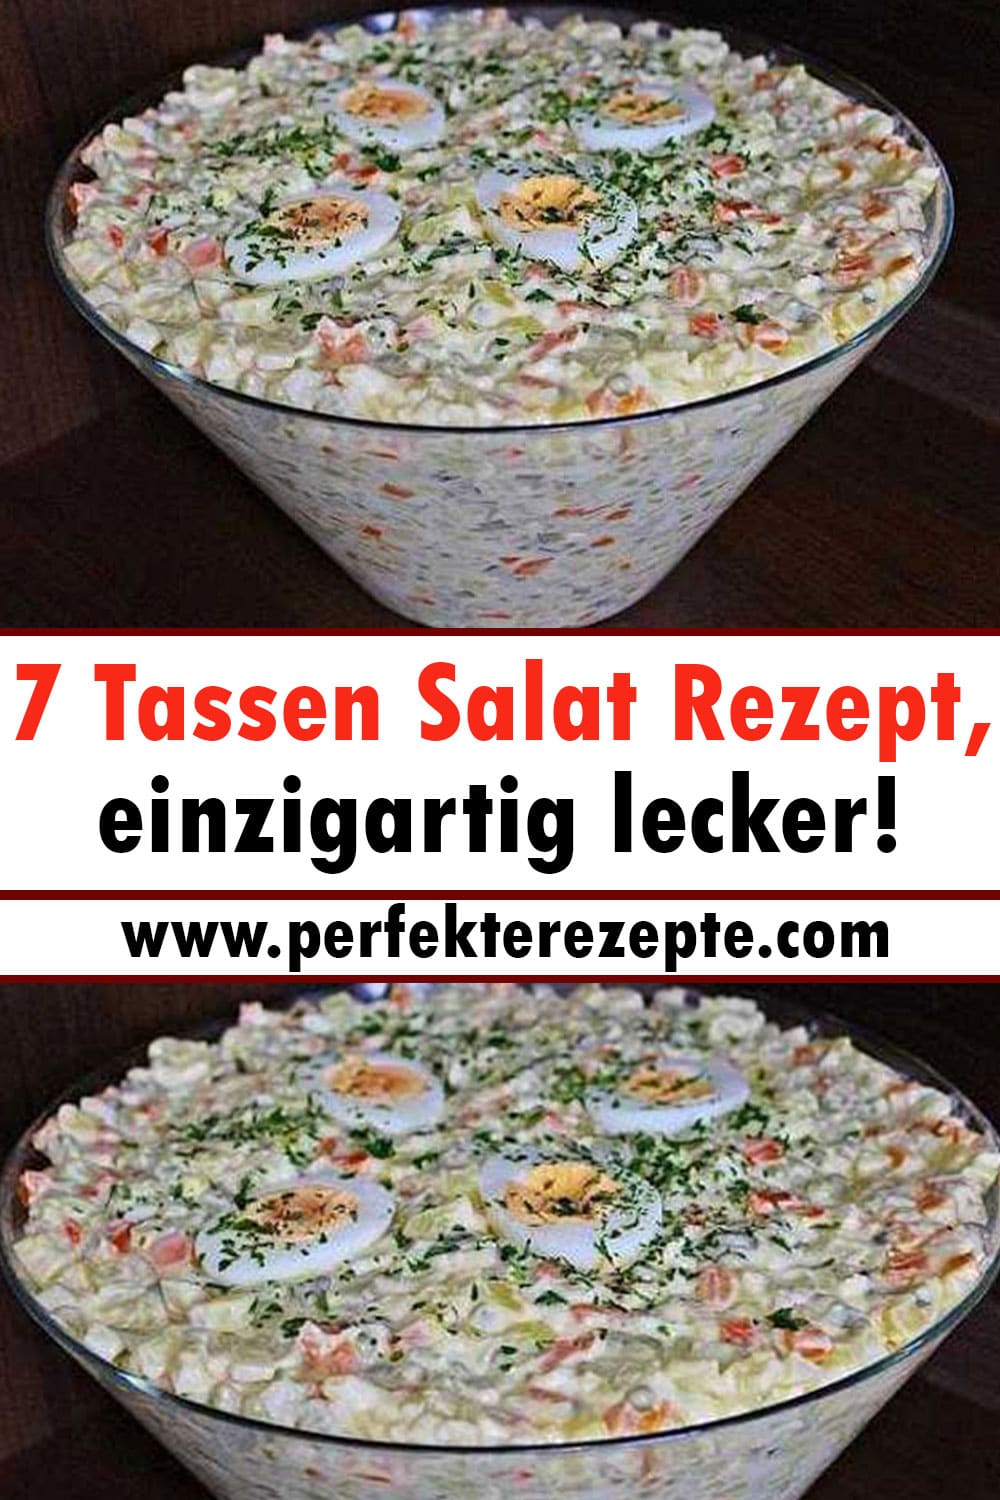 7 Tassen Salat Rezept, einzigartig lecker!